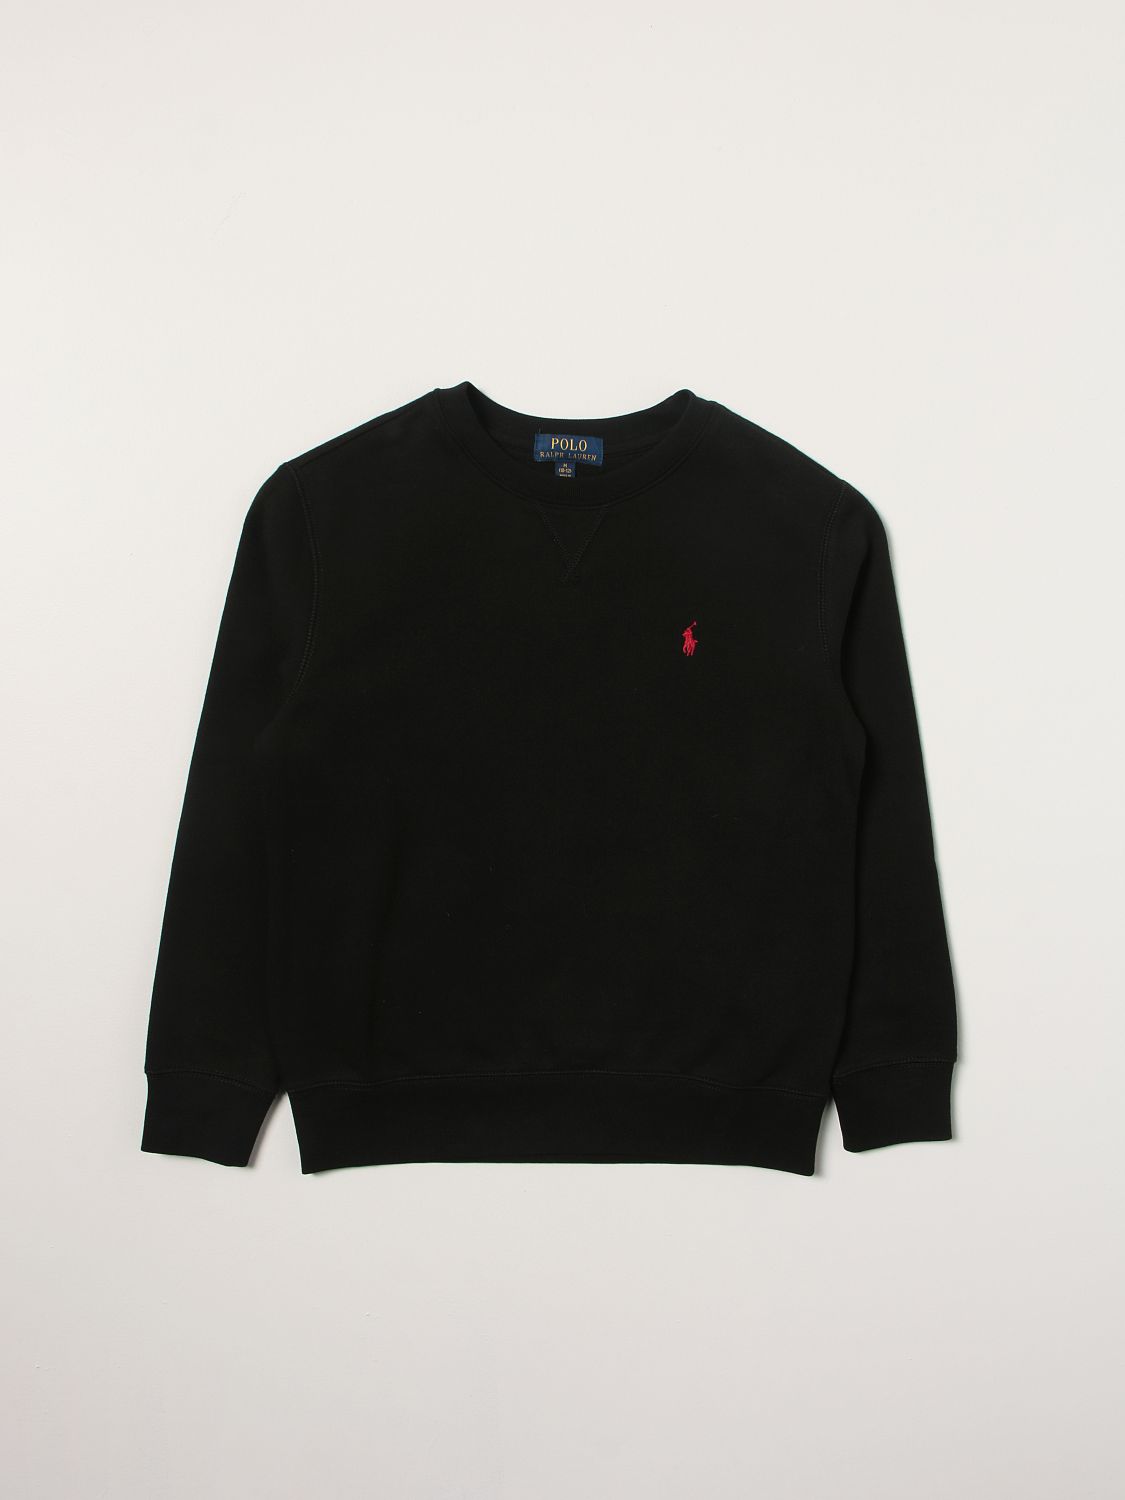 Polo Ralph Lauren jumper Black M WOMEN FASHION Jumpers & Sweatshirts NO STYLE discount 97% 